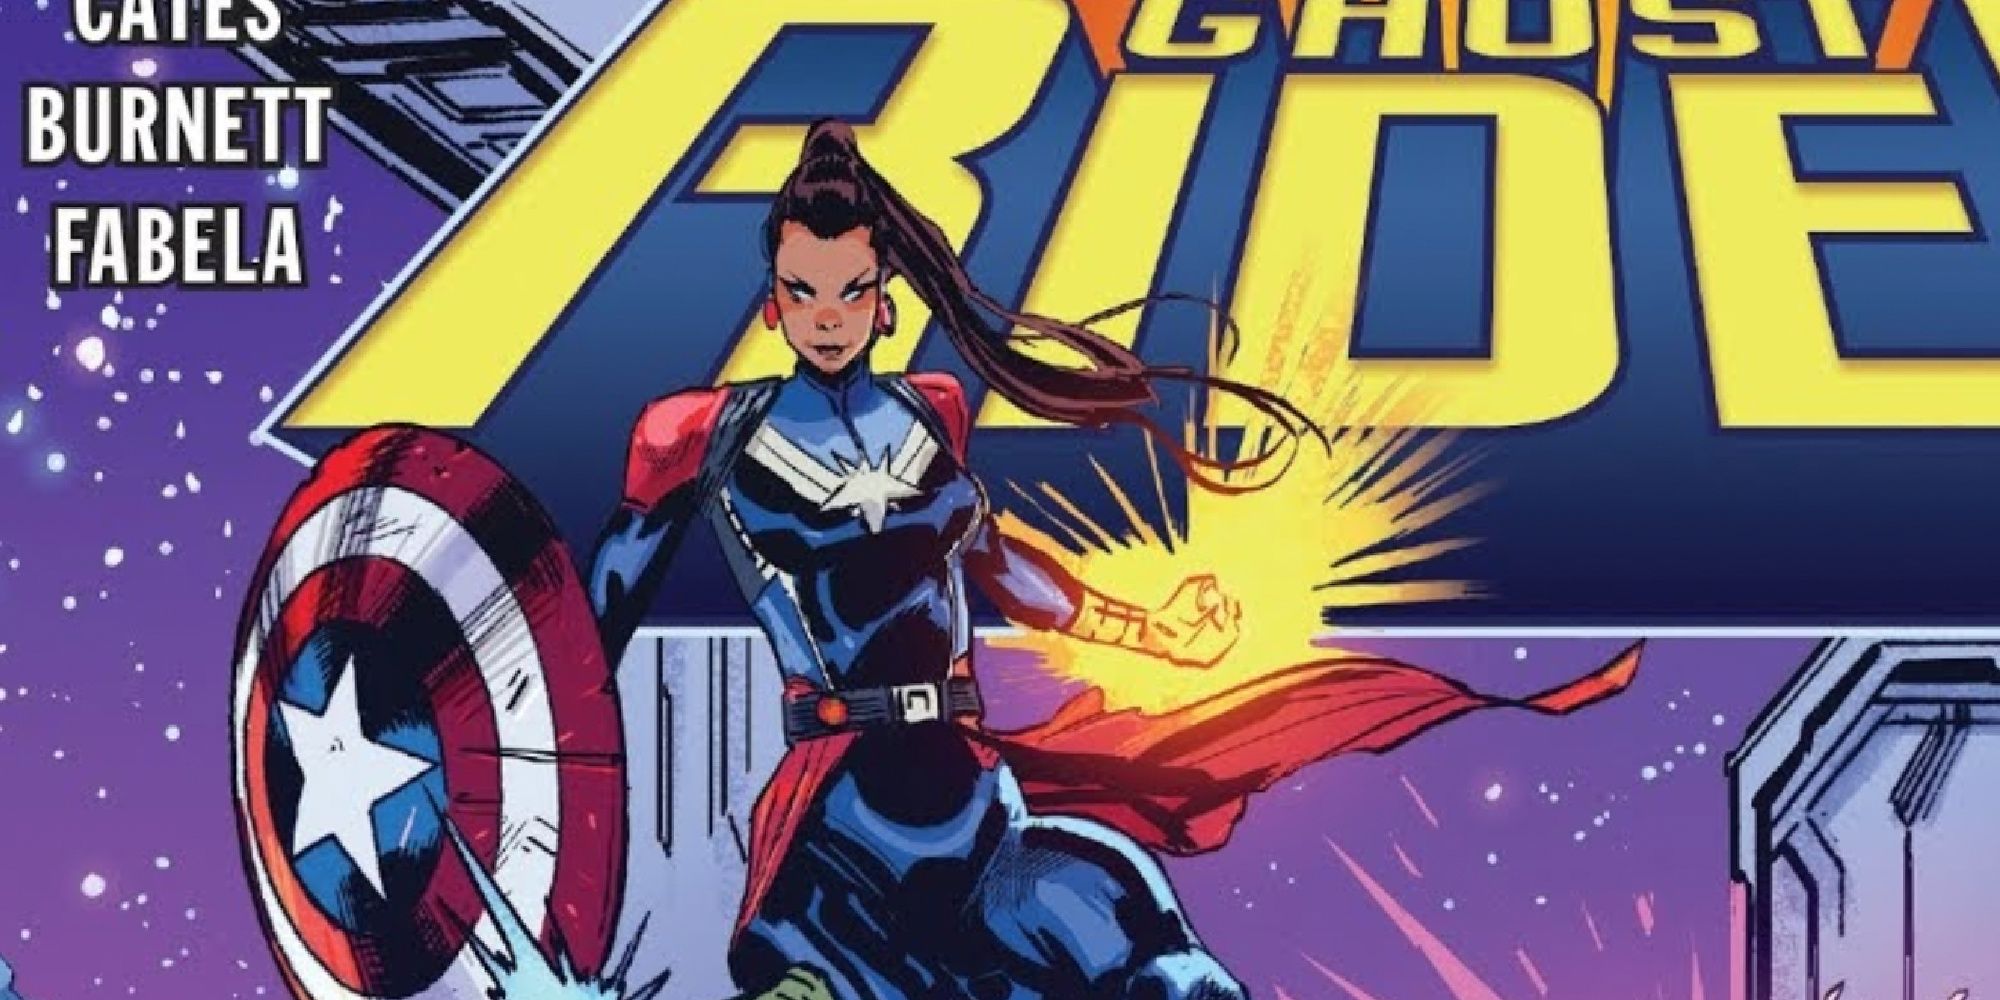 Kamala Khan becomes Captain Marvel in Marvel Comics.